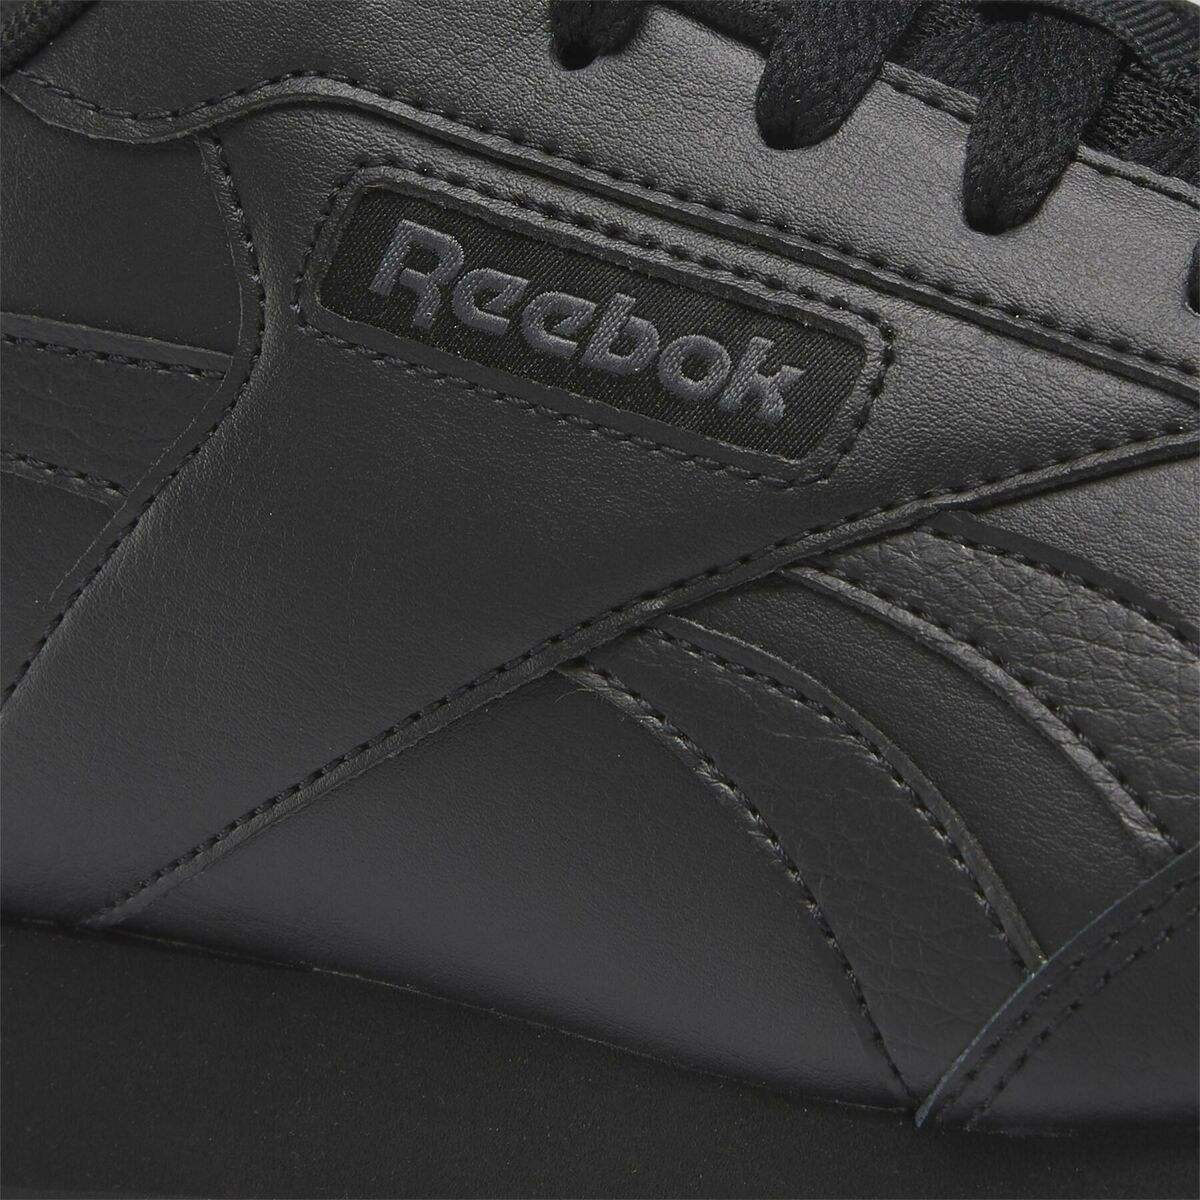 Chaussures de Sport pour Homme Reebok GLIDE GZ2322 Noir - Reebok - Jardin D'Eyden - jardindeyden.fr